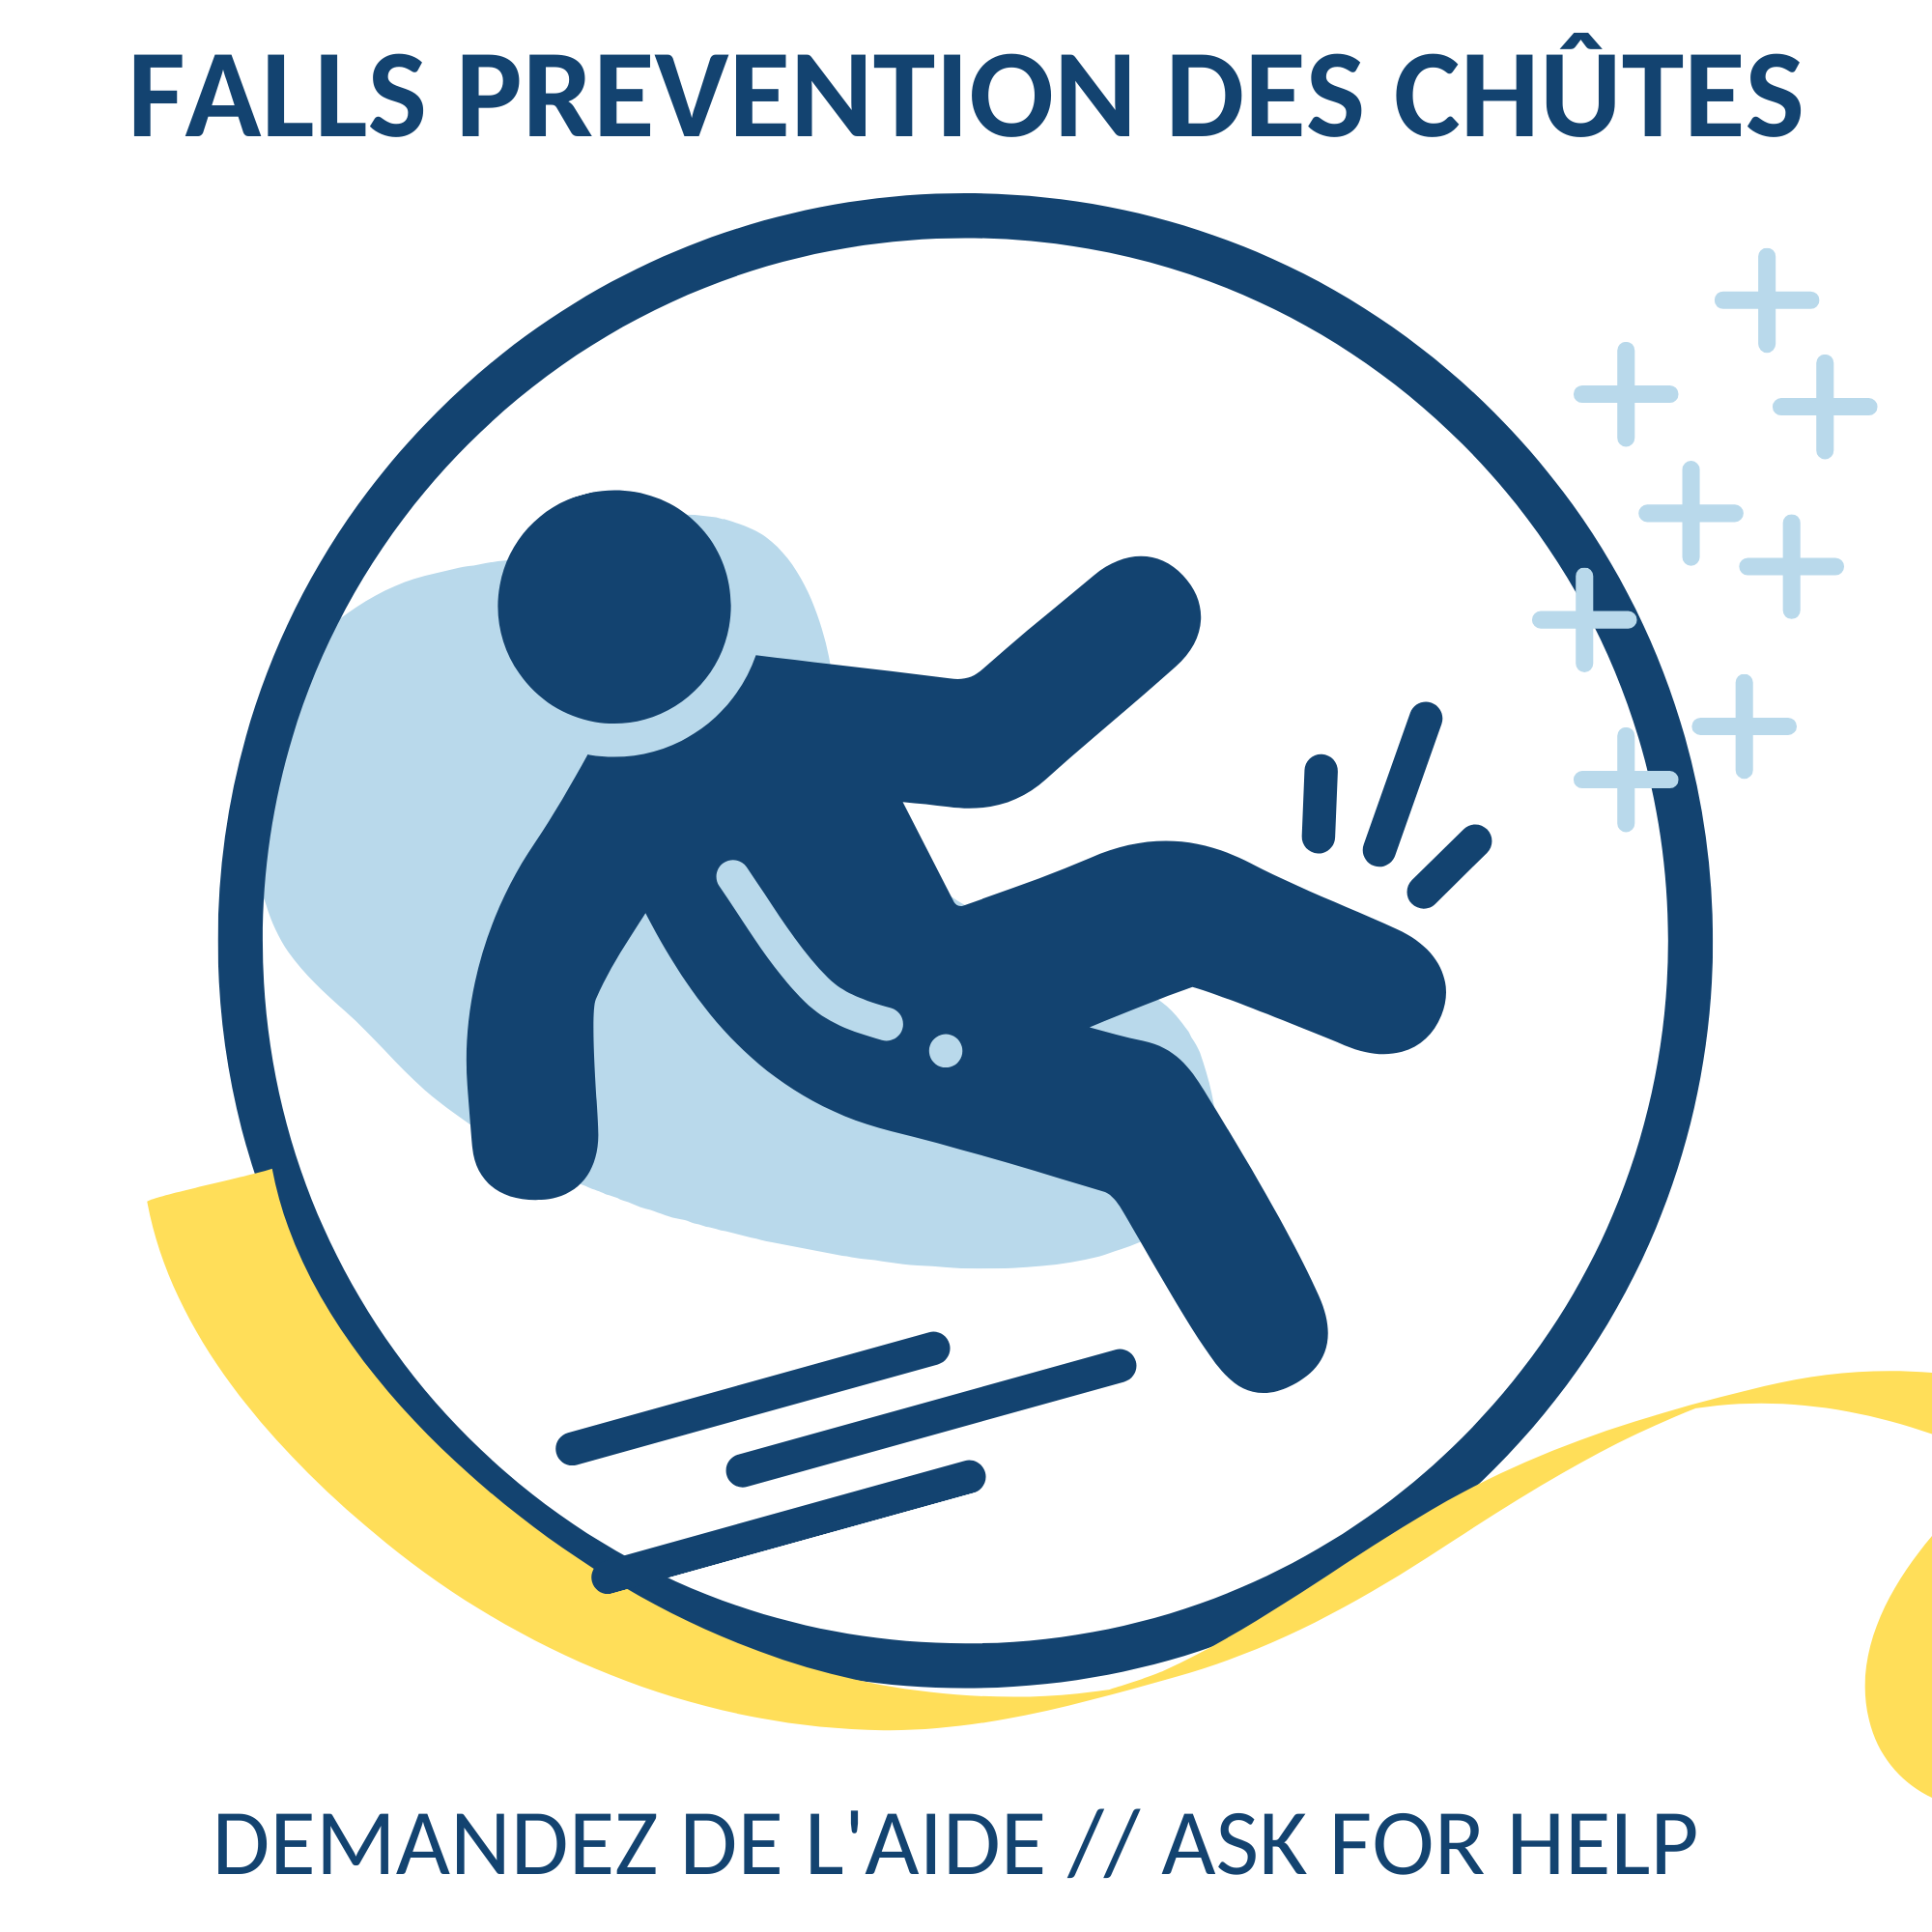 https://hgh.ca/wp-content/uploads/2022/06/prevention-des-chutes-falls-prevention.png